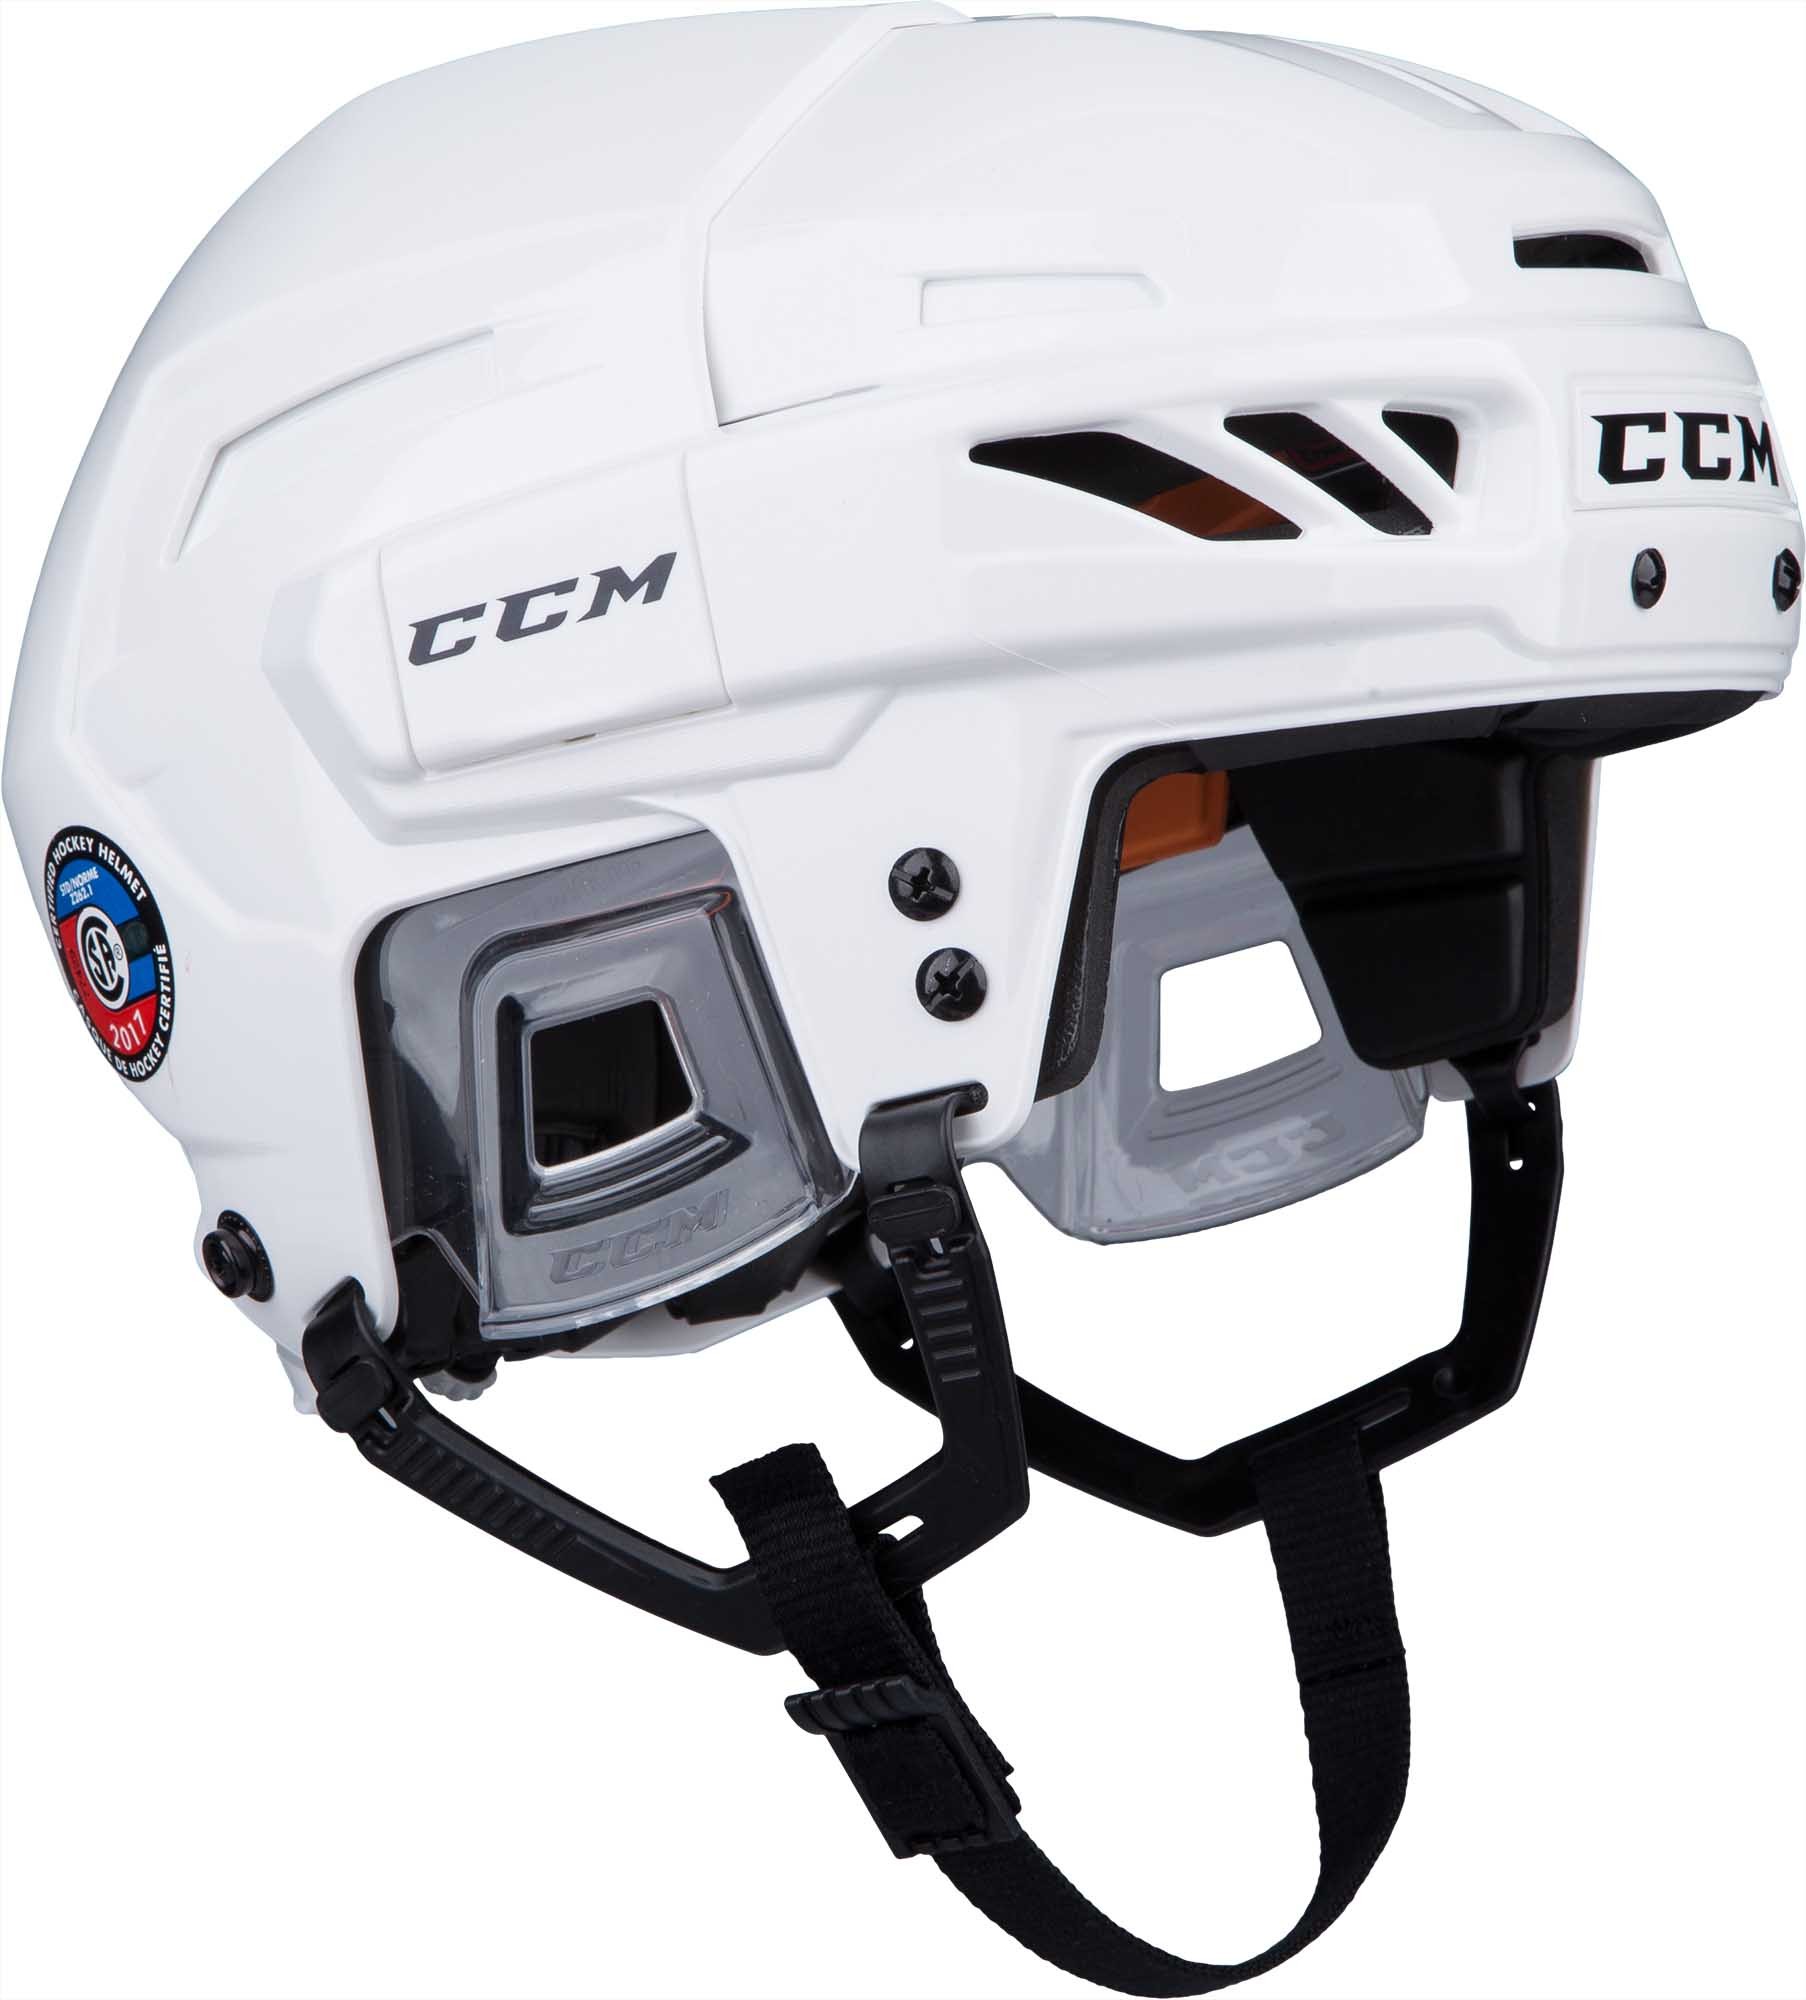 CCM Fitlite FL90 Helm schwarz 